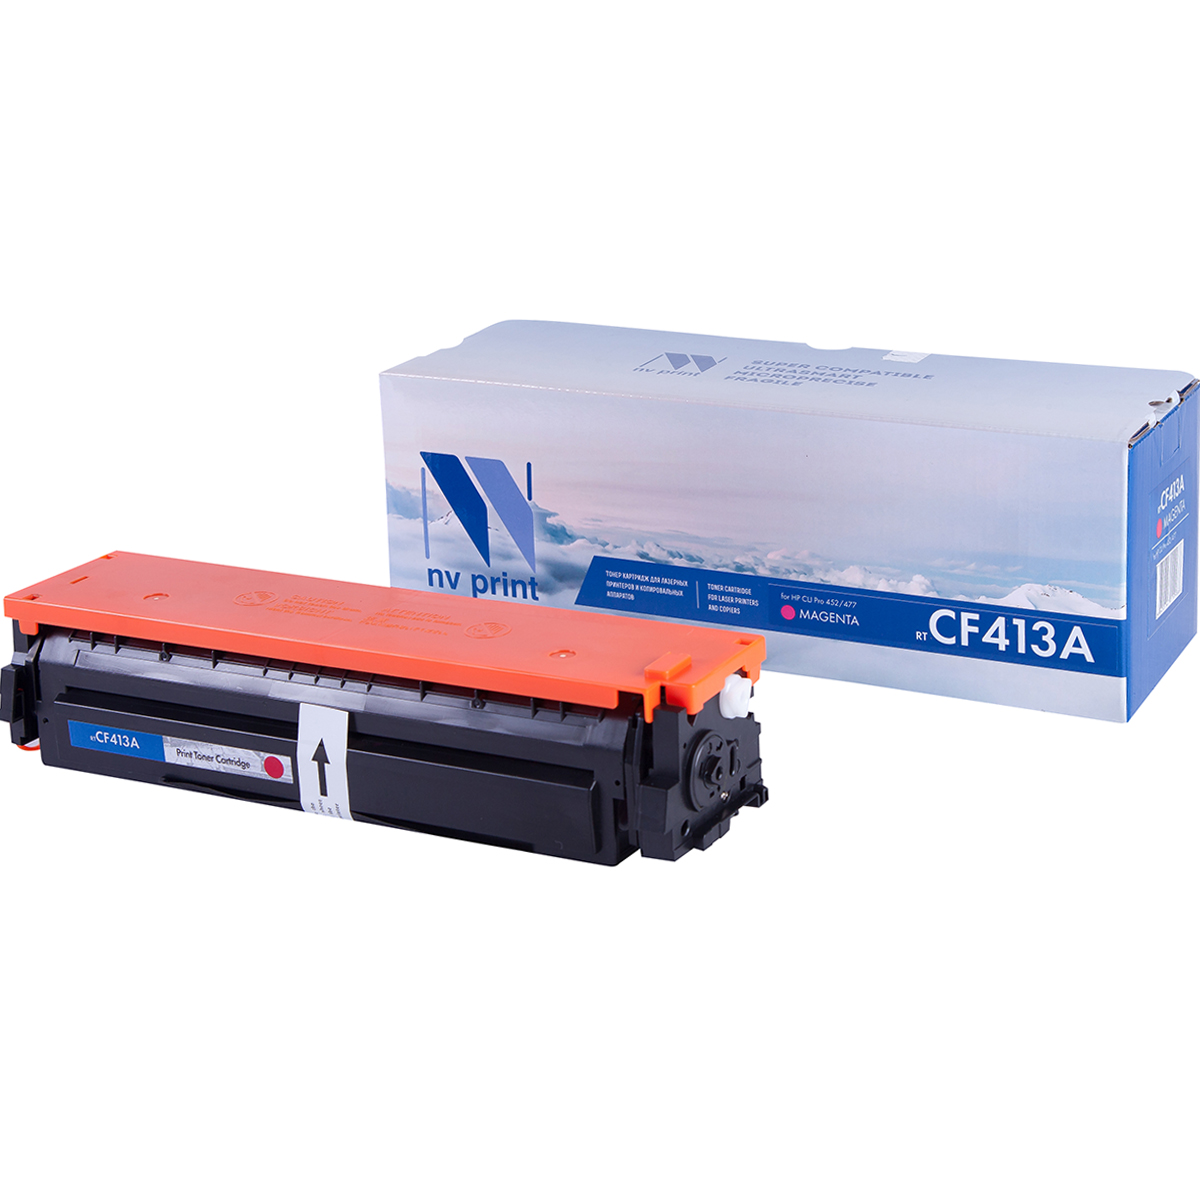   NV-Print  HP LaserJet Color Pro M377/M452/M477, CF413A Magenta